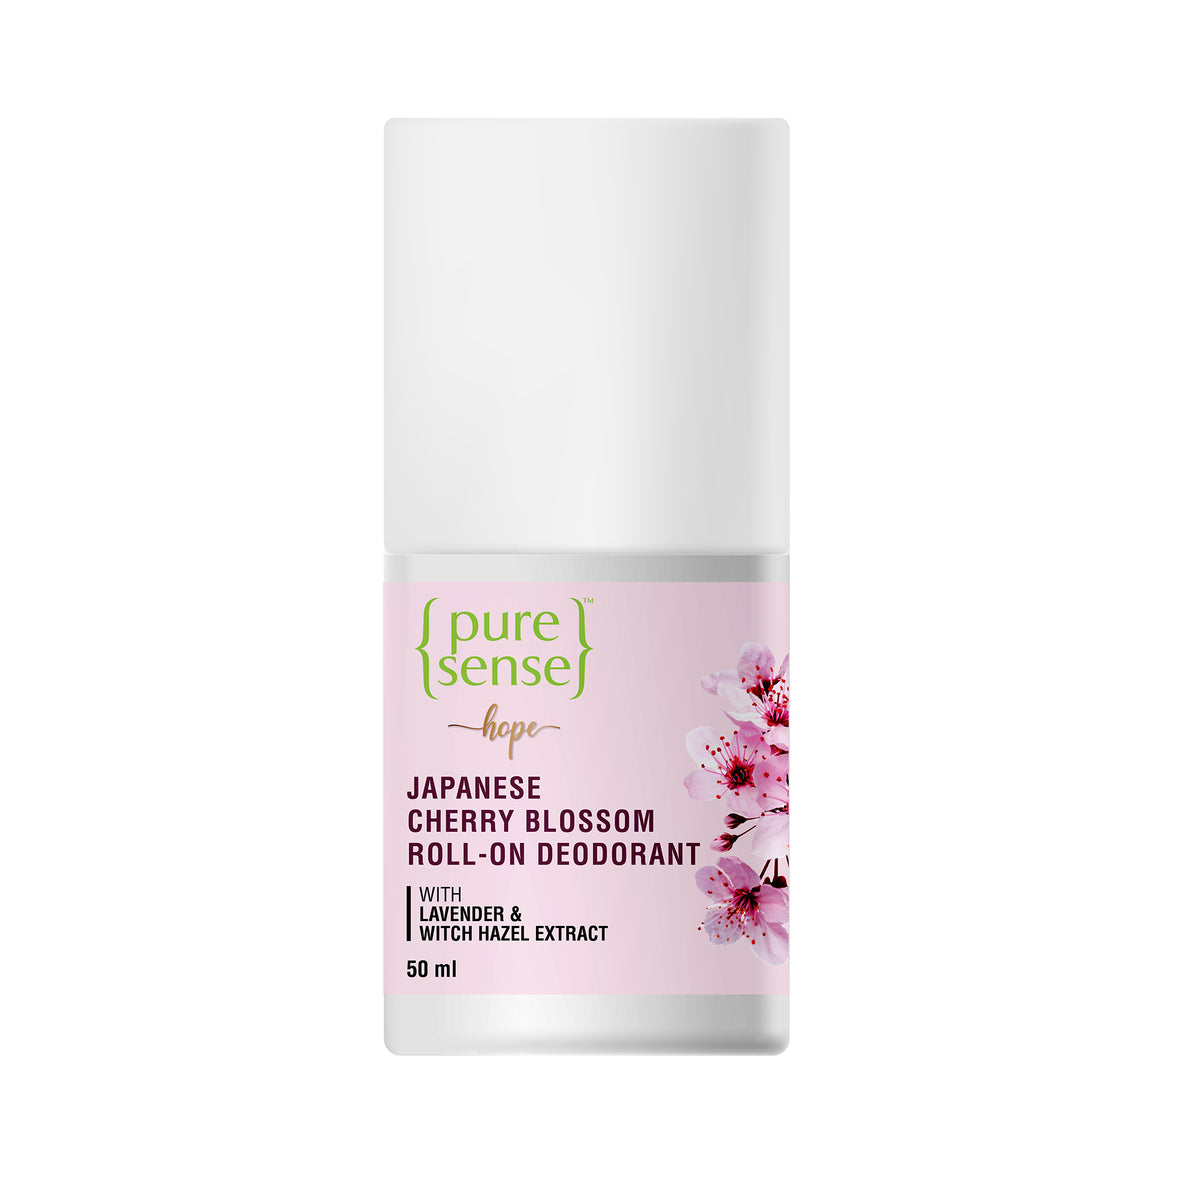 Hope Japanese Cherry Blossom Roll-on Deodorant